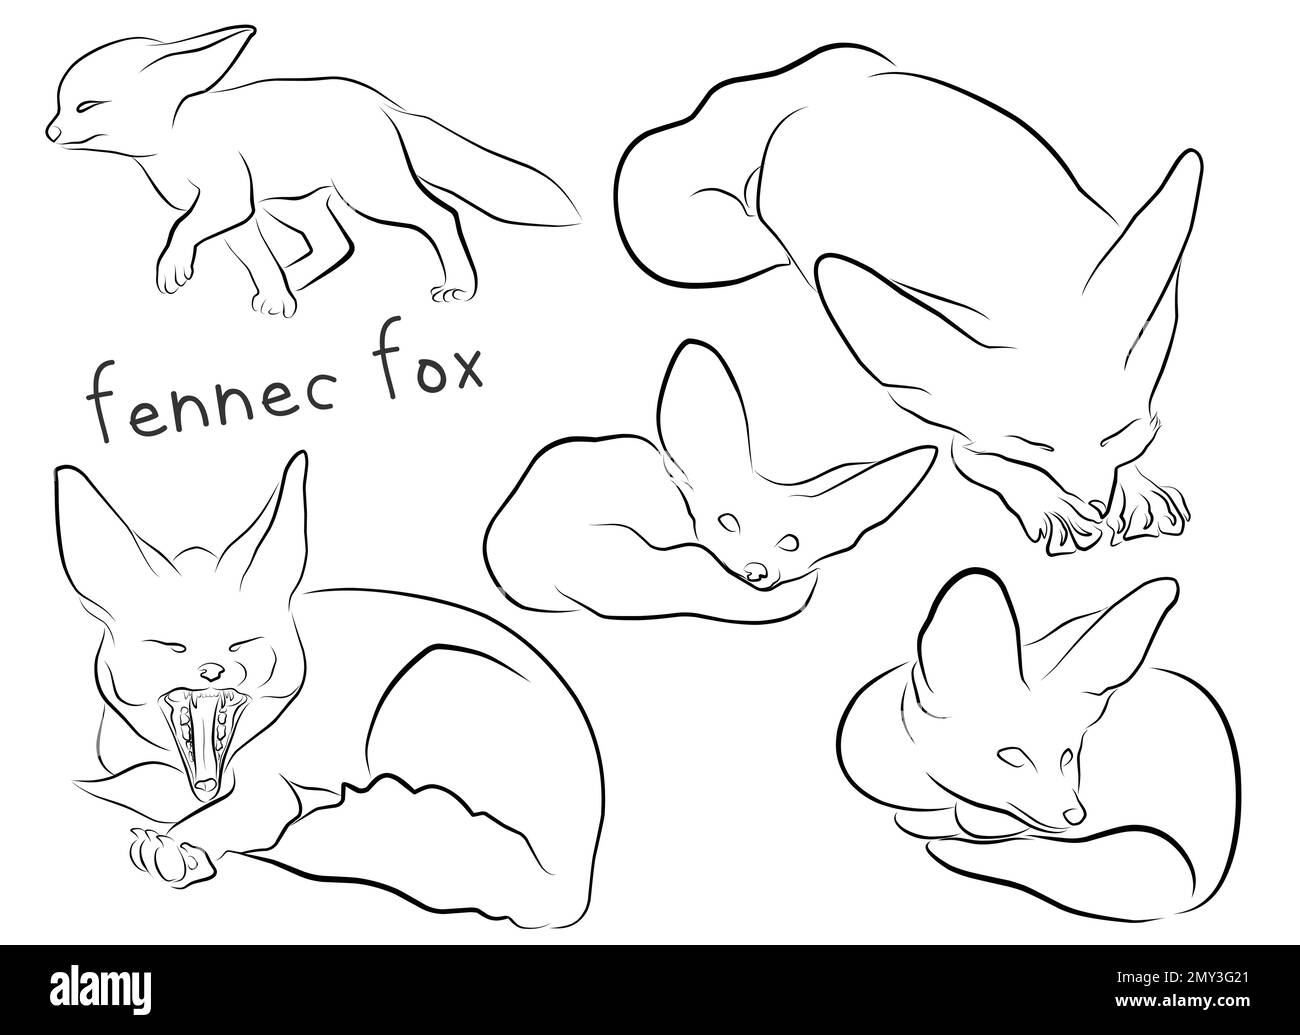 fennec fox set outline illustration vector elements for design Stock Vector